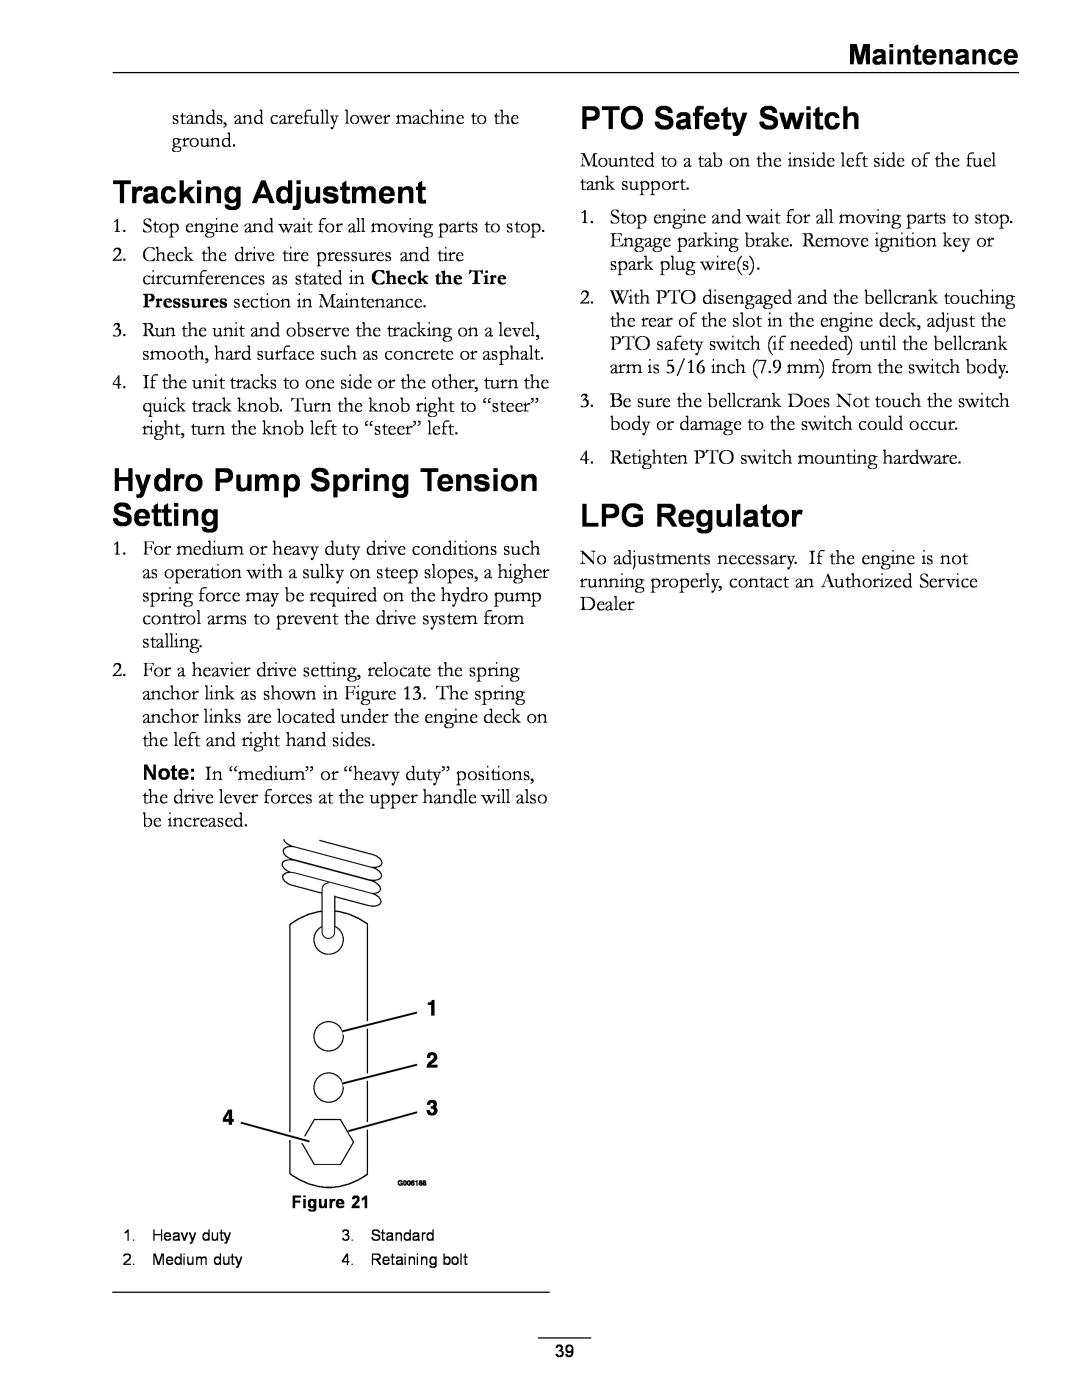 Exmark 000 & higher Tracking Adjustment, Hydro Pump Spring Tension Setting, PTO Safety Switch, LPG Regulator, Maintenance 